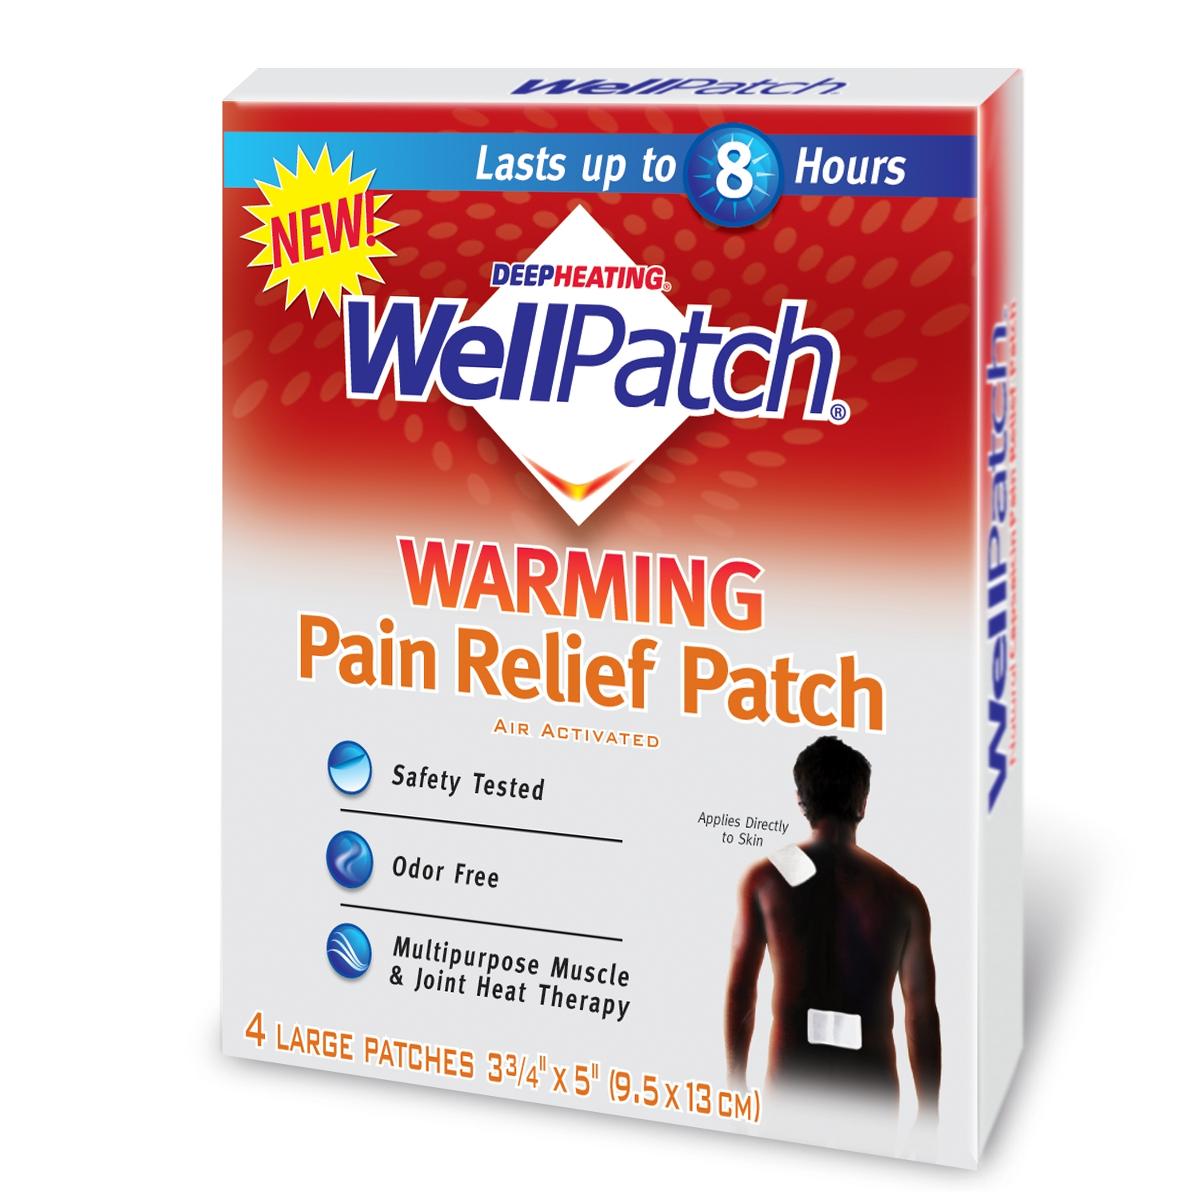 WELLPATCH WARMING PAIN RELIEF- capsaicin patch